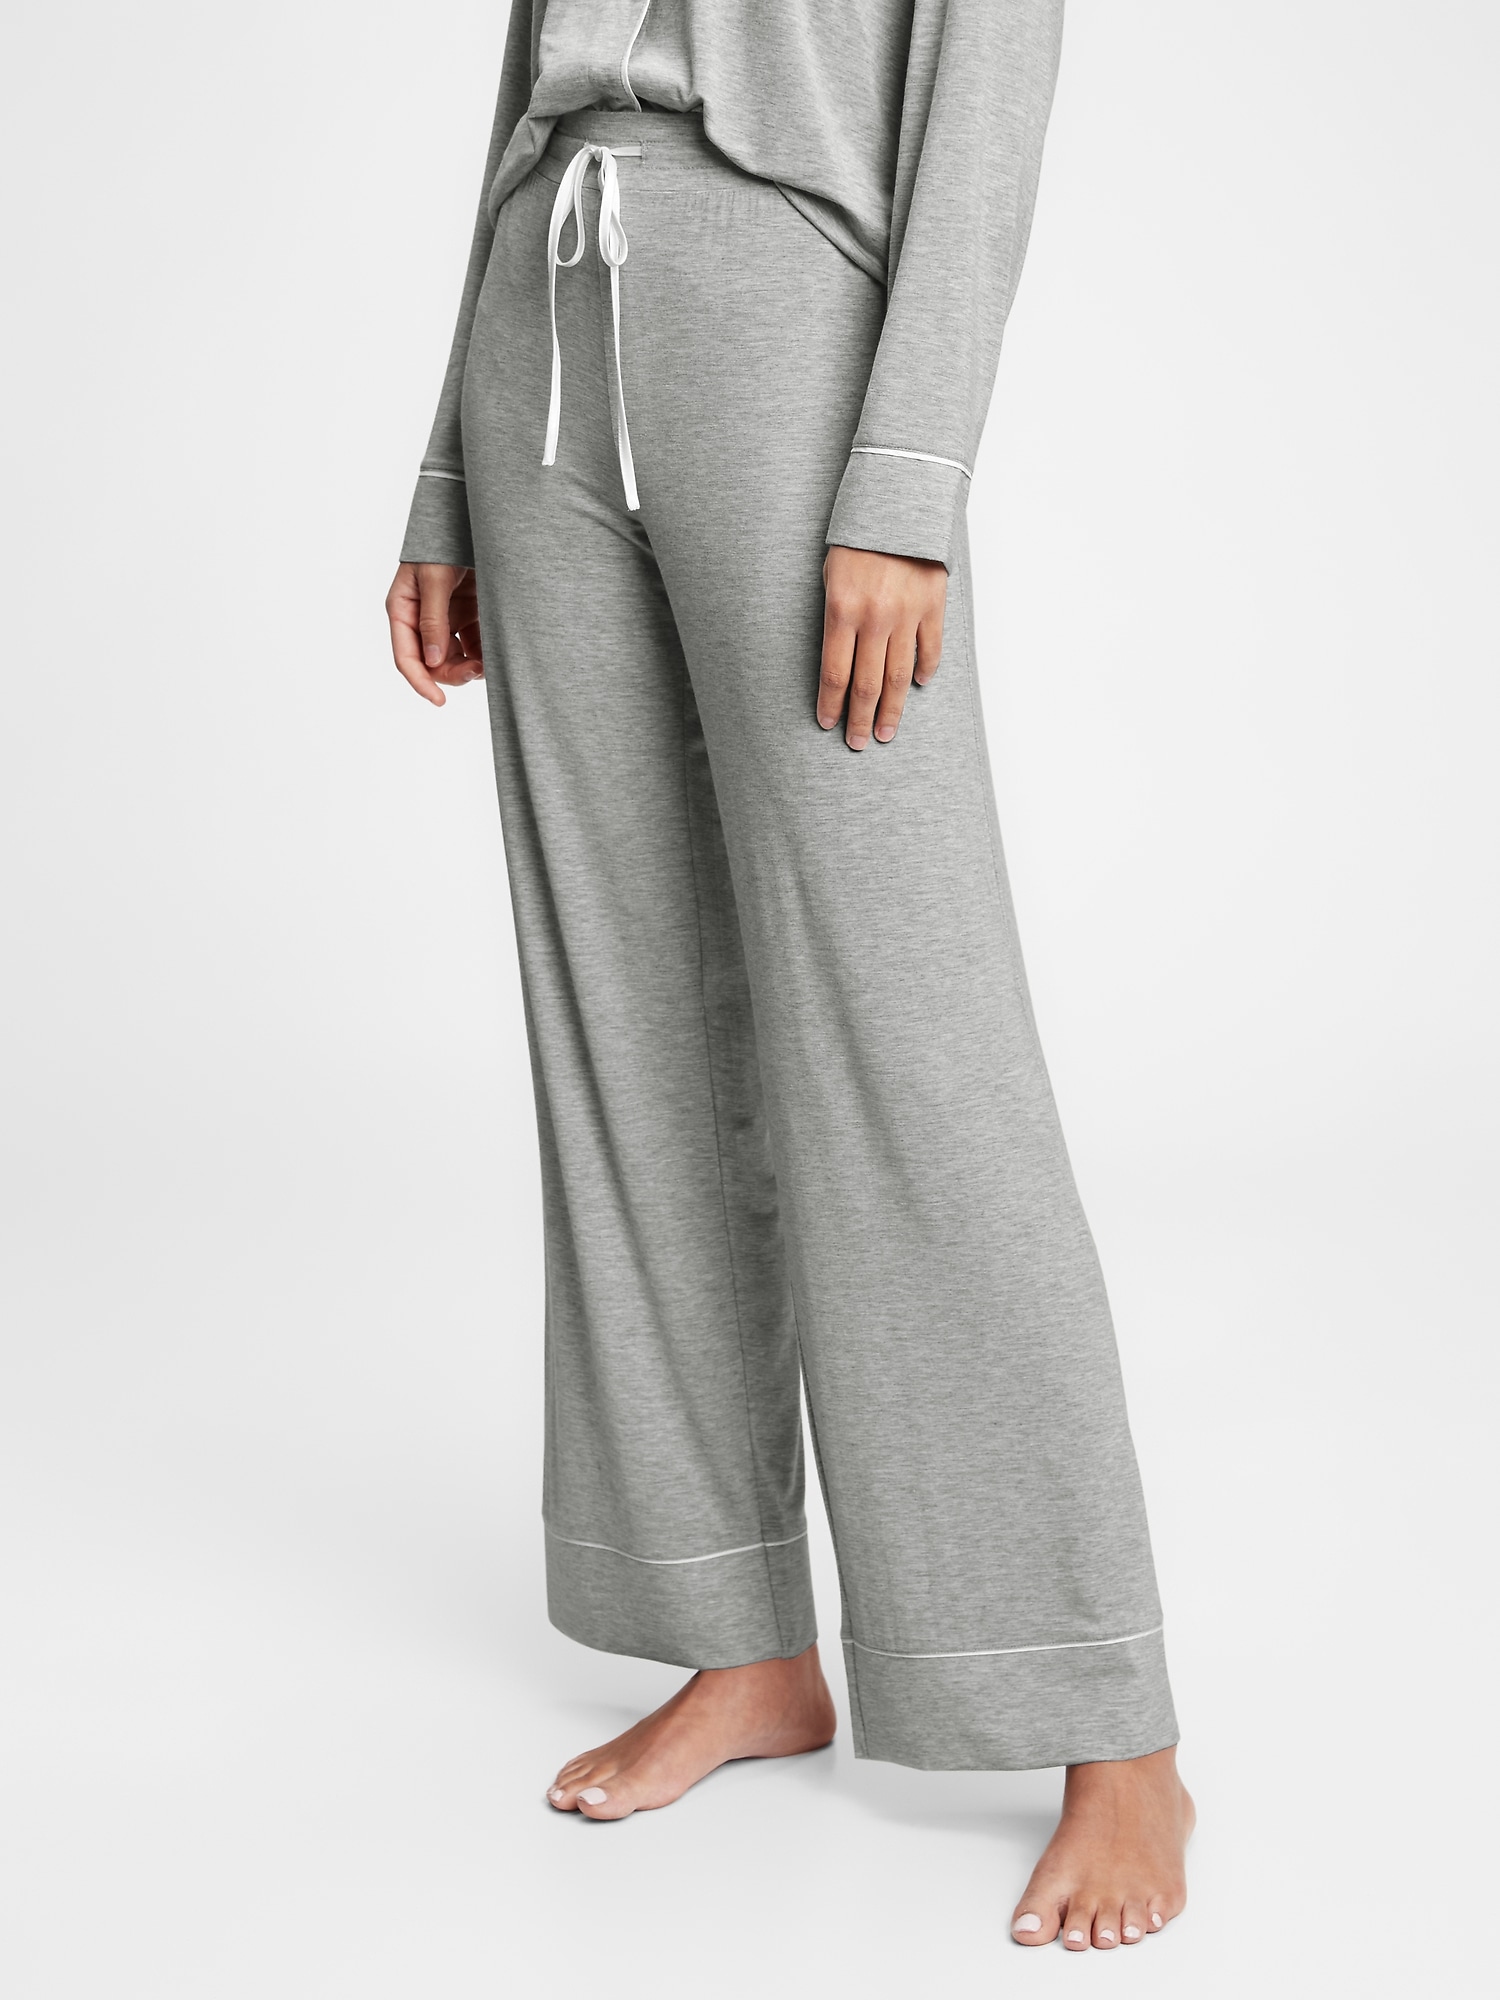 Air Curvey Casual Womens Pants Soft Lounge Pants Sleep Pajama Bottoms With  Pocket